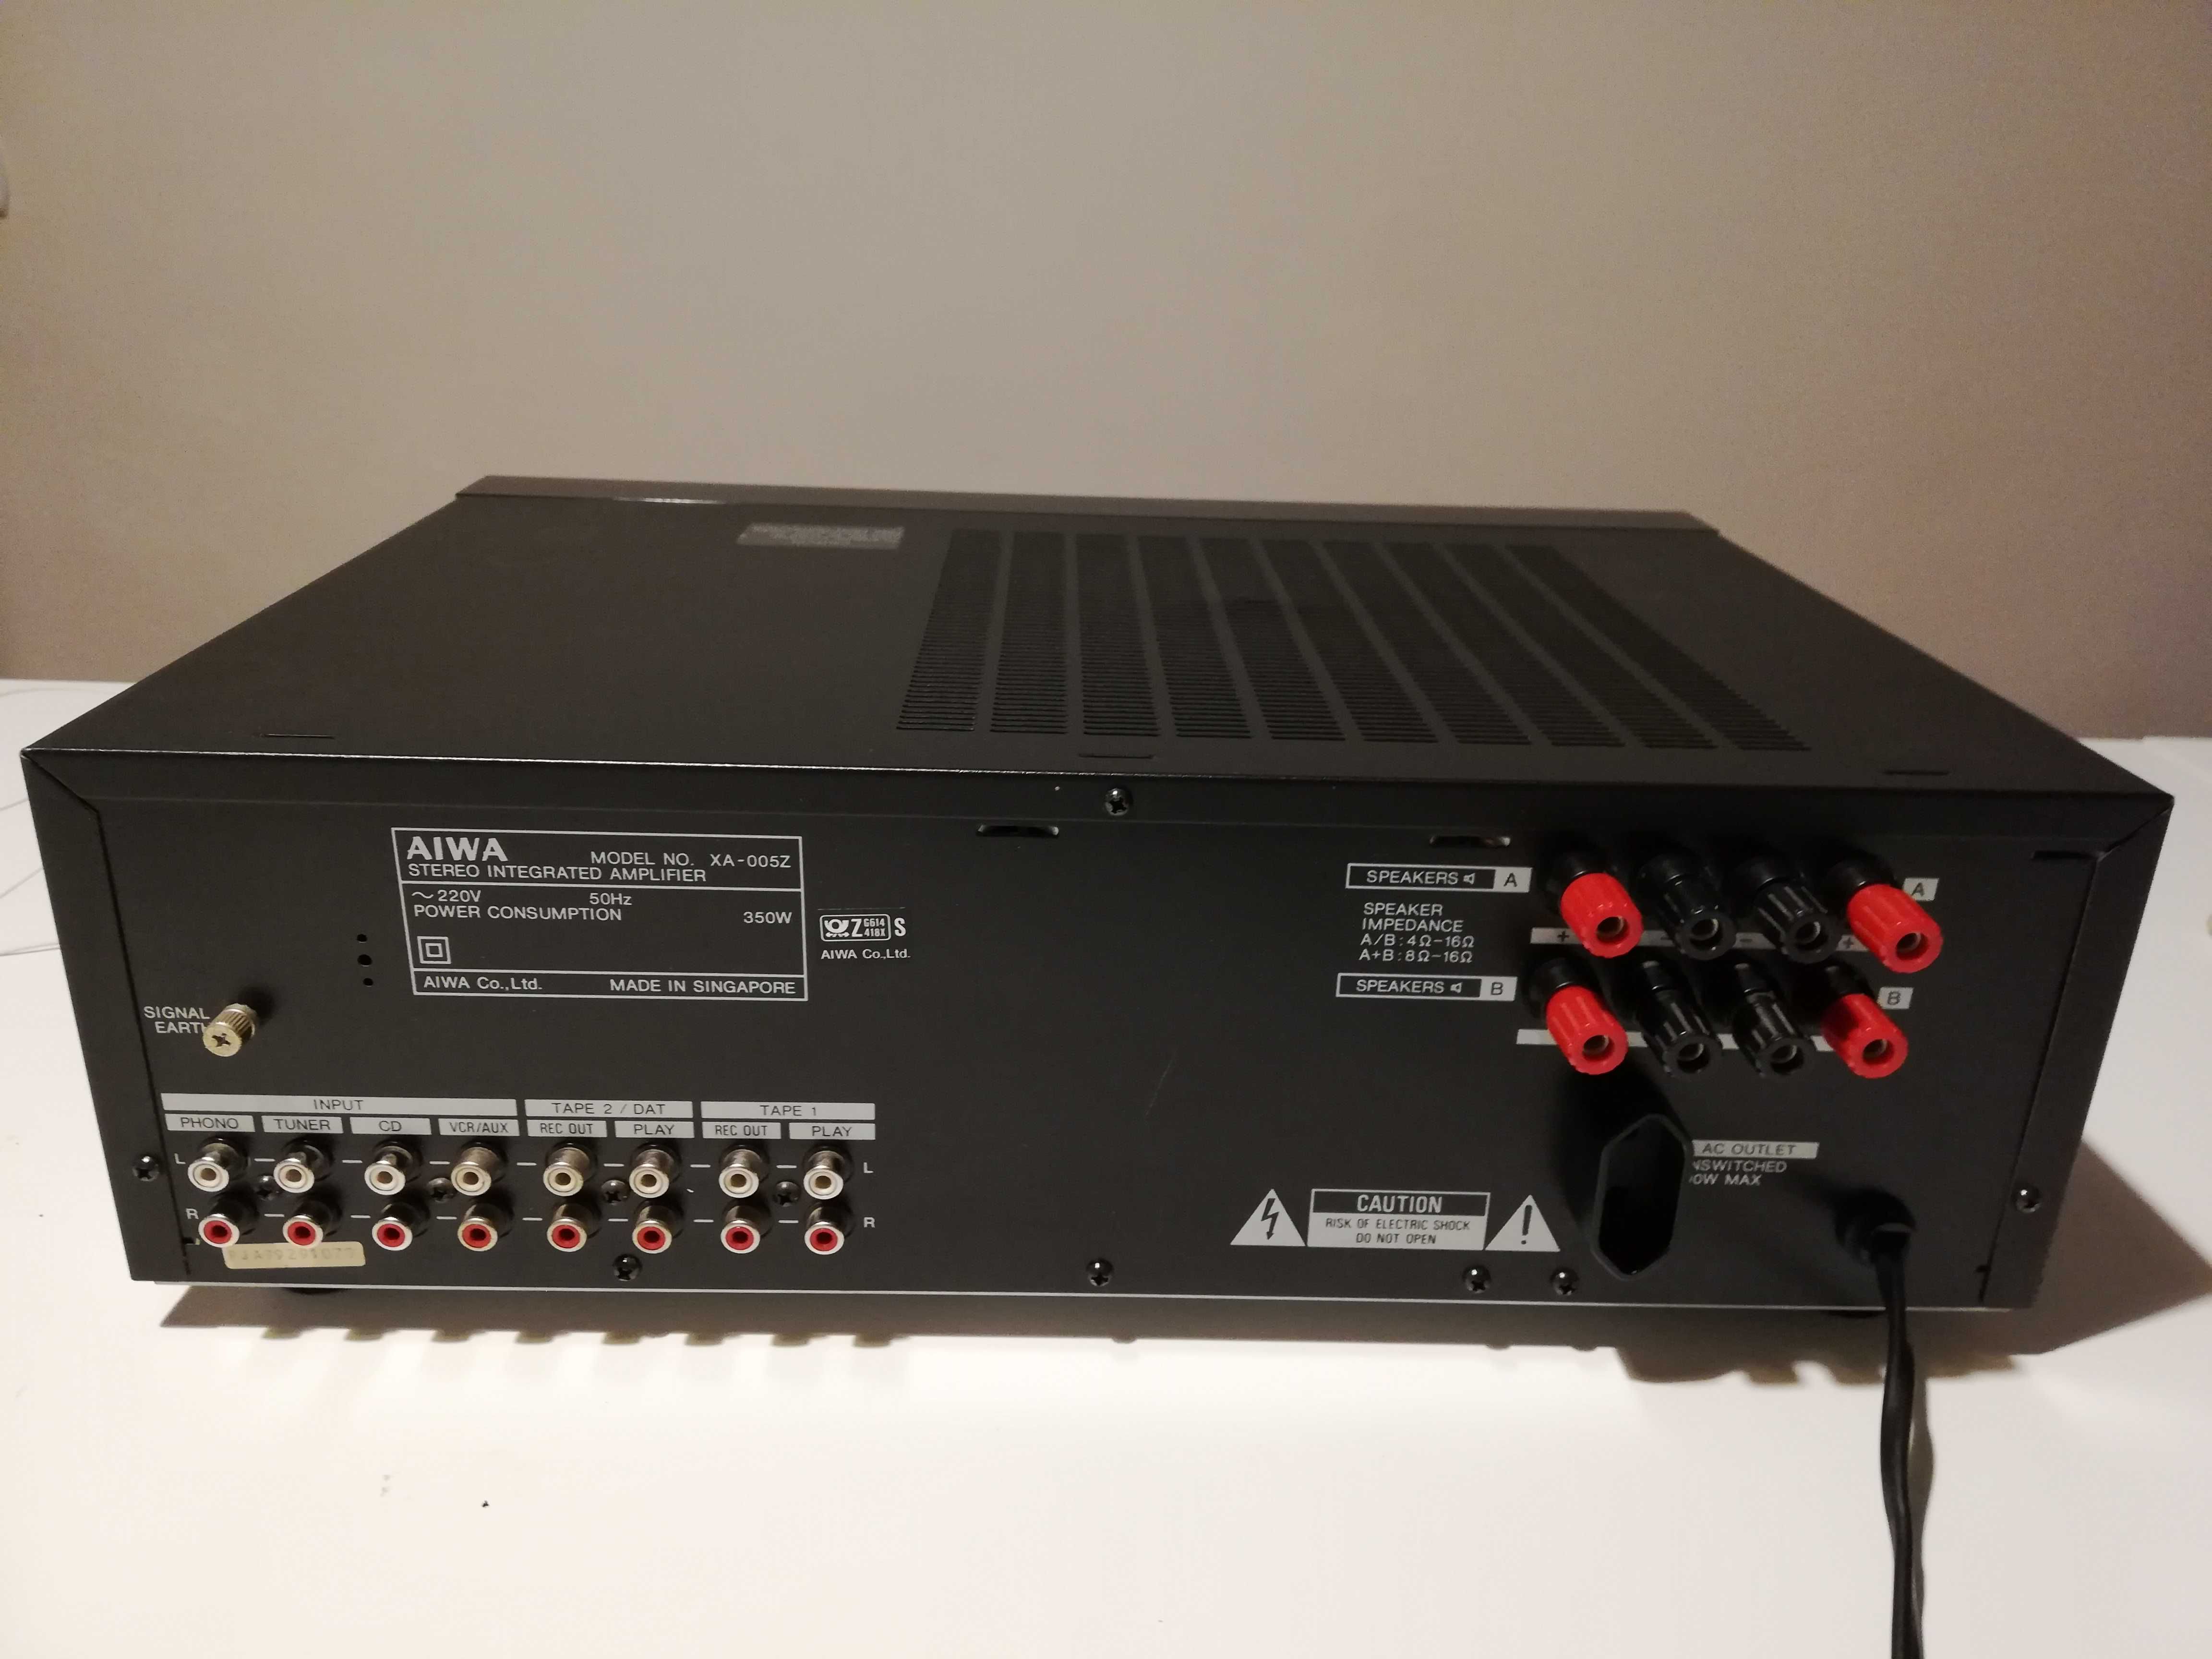 Amplificator AIWA model XA-005Z - Impecabil/ca Nou